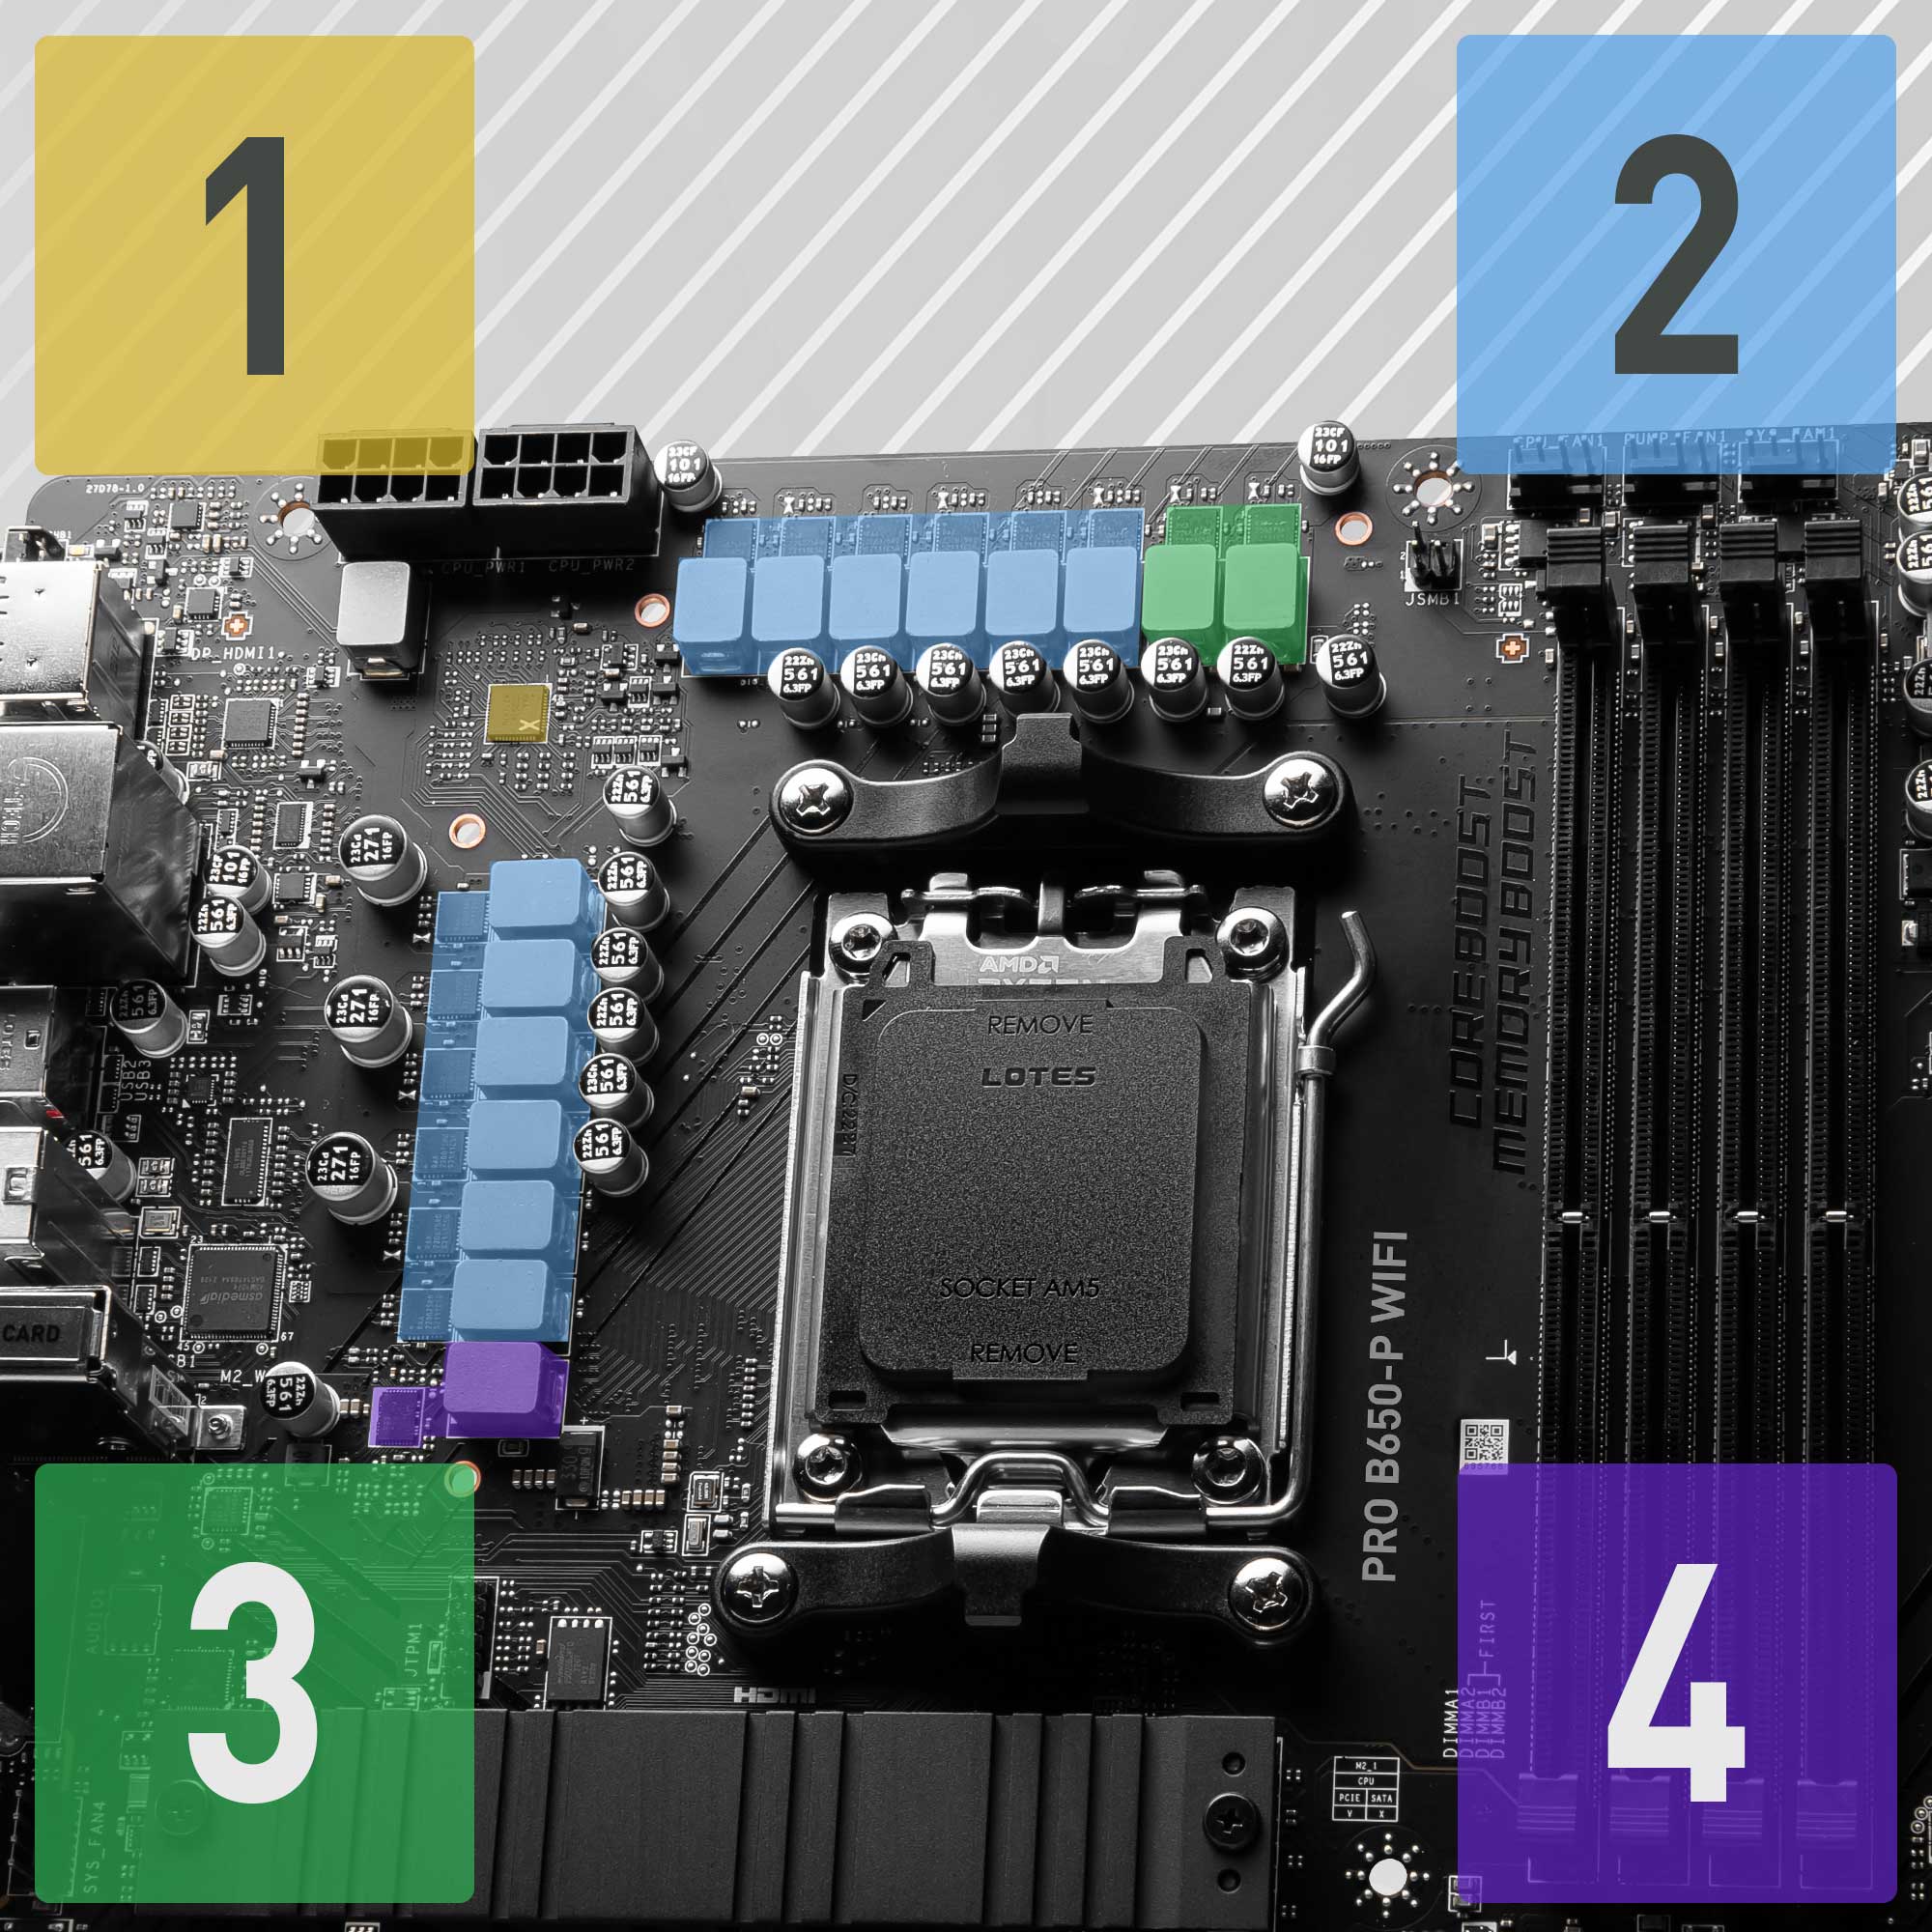 MSI PRO B650-S WIFI Desktop Motherboard - AMD B650 Chipset - Socket AM5 -  ATX 